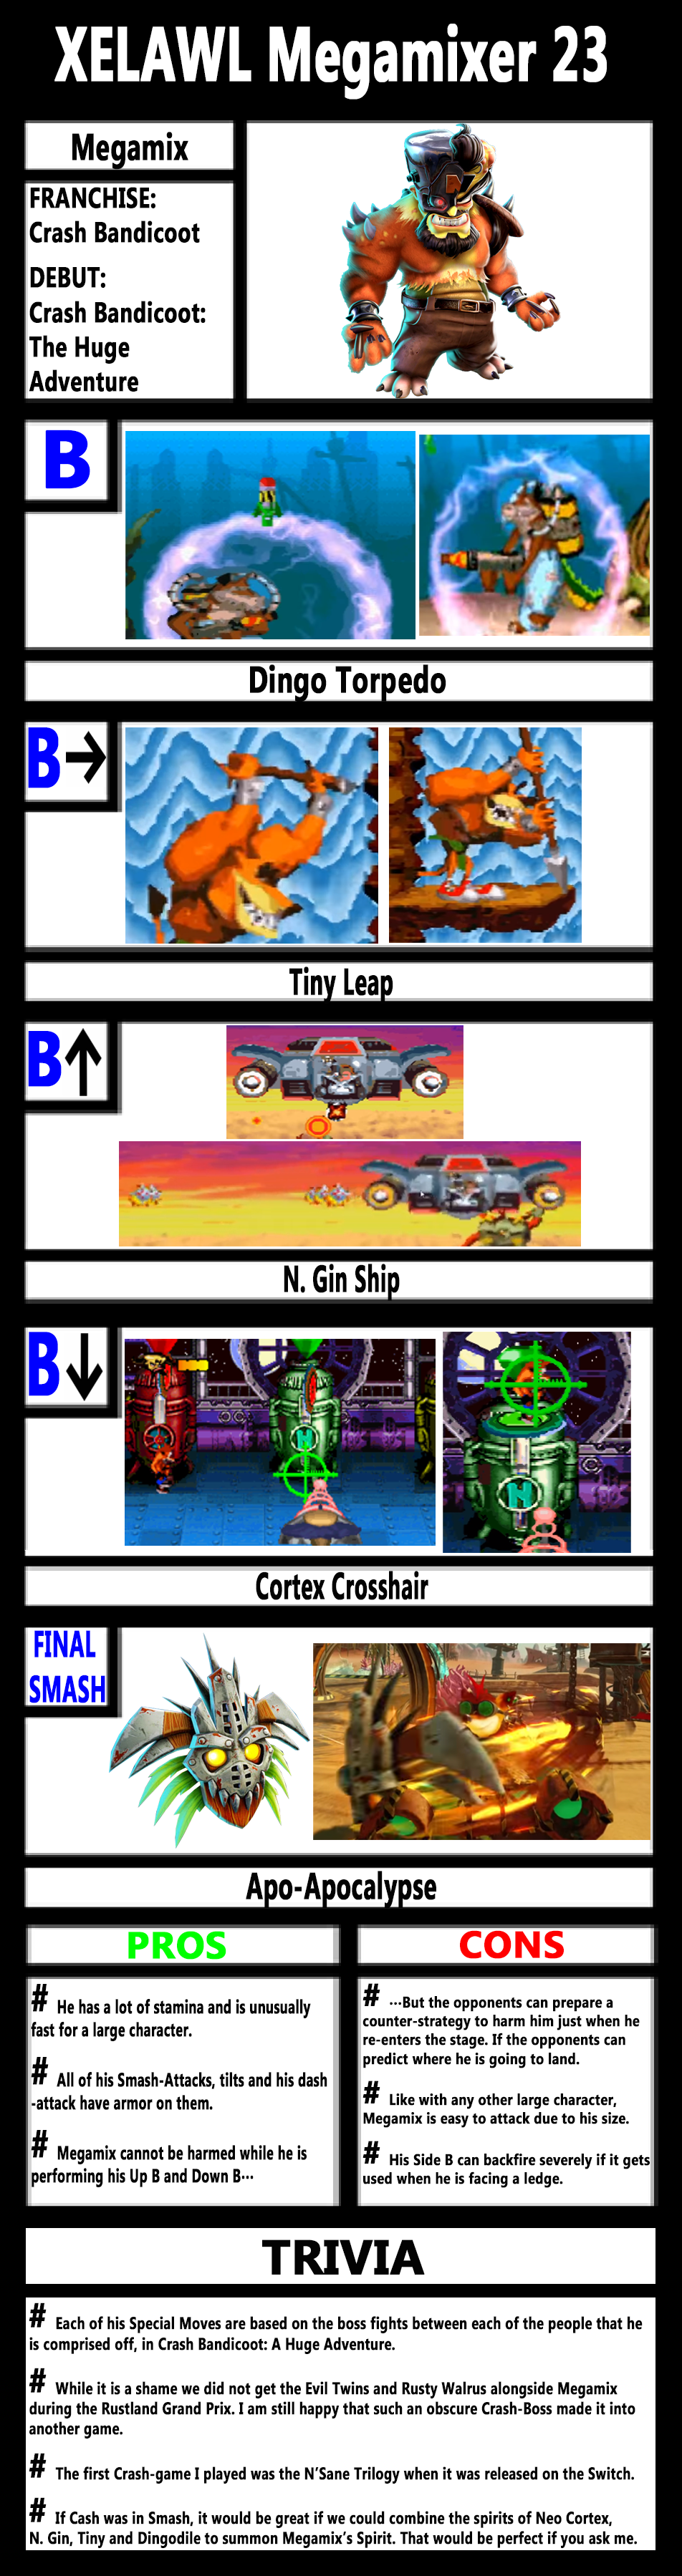 Crash Bandicoot Super Smash Bros Moveset by Hyrule64 on DeviantArt